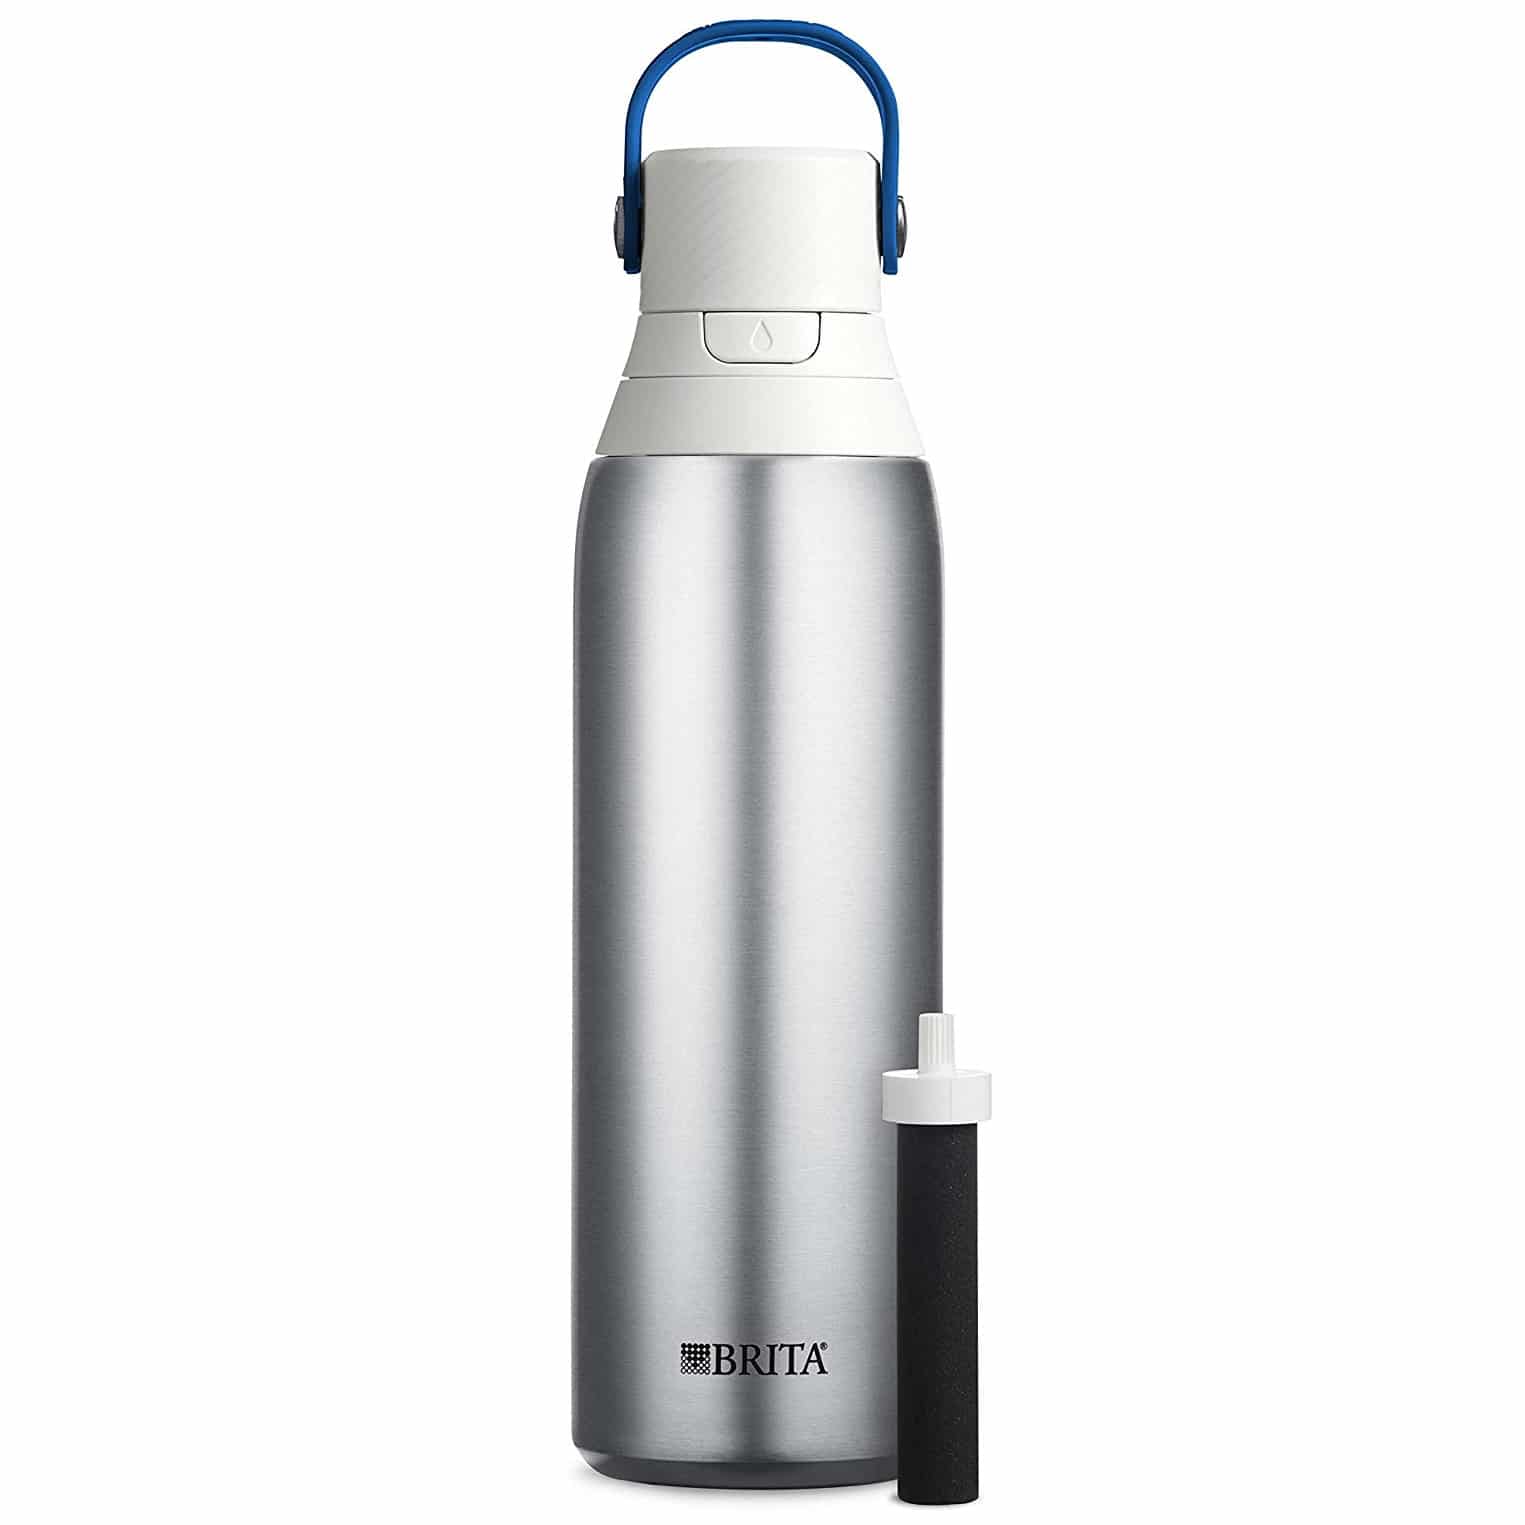 Brita 20 Ounce Premium Filtering Water Bottle